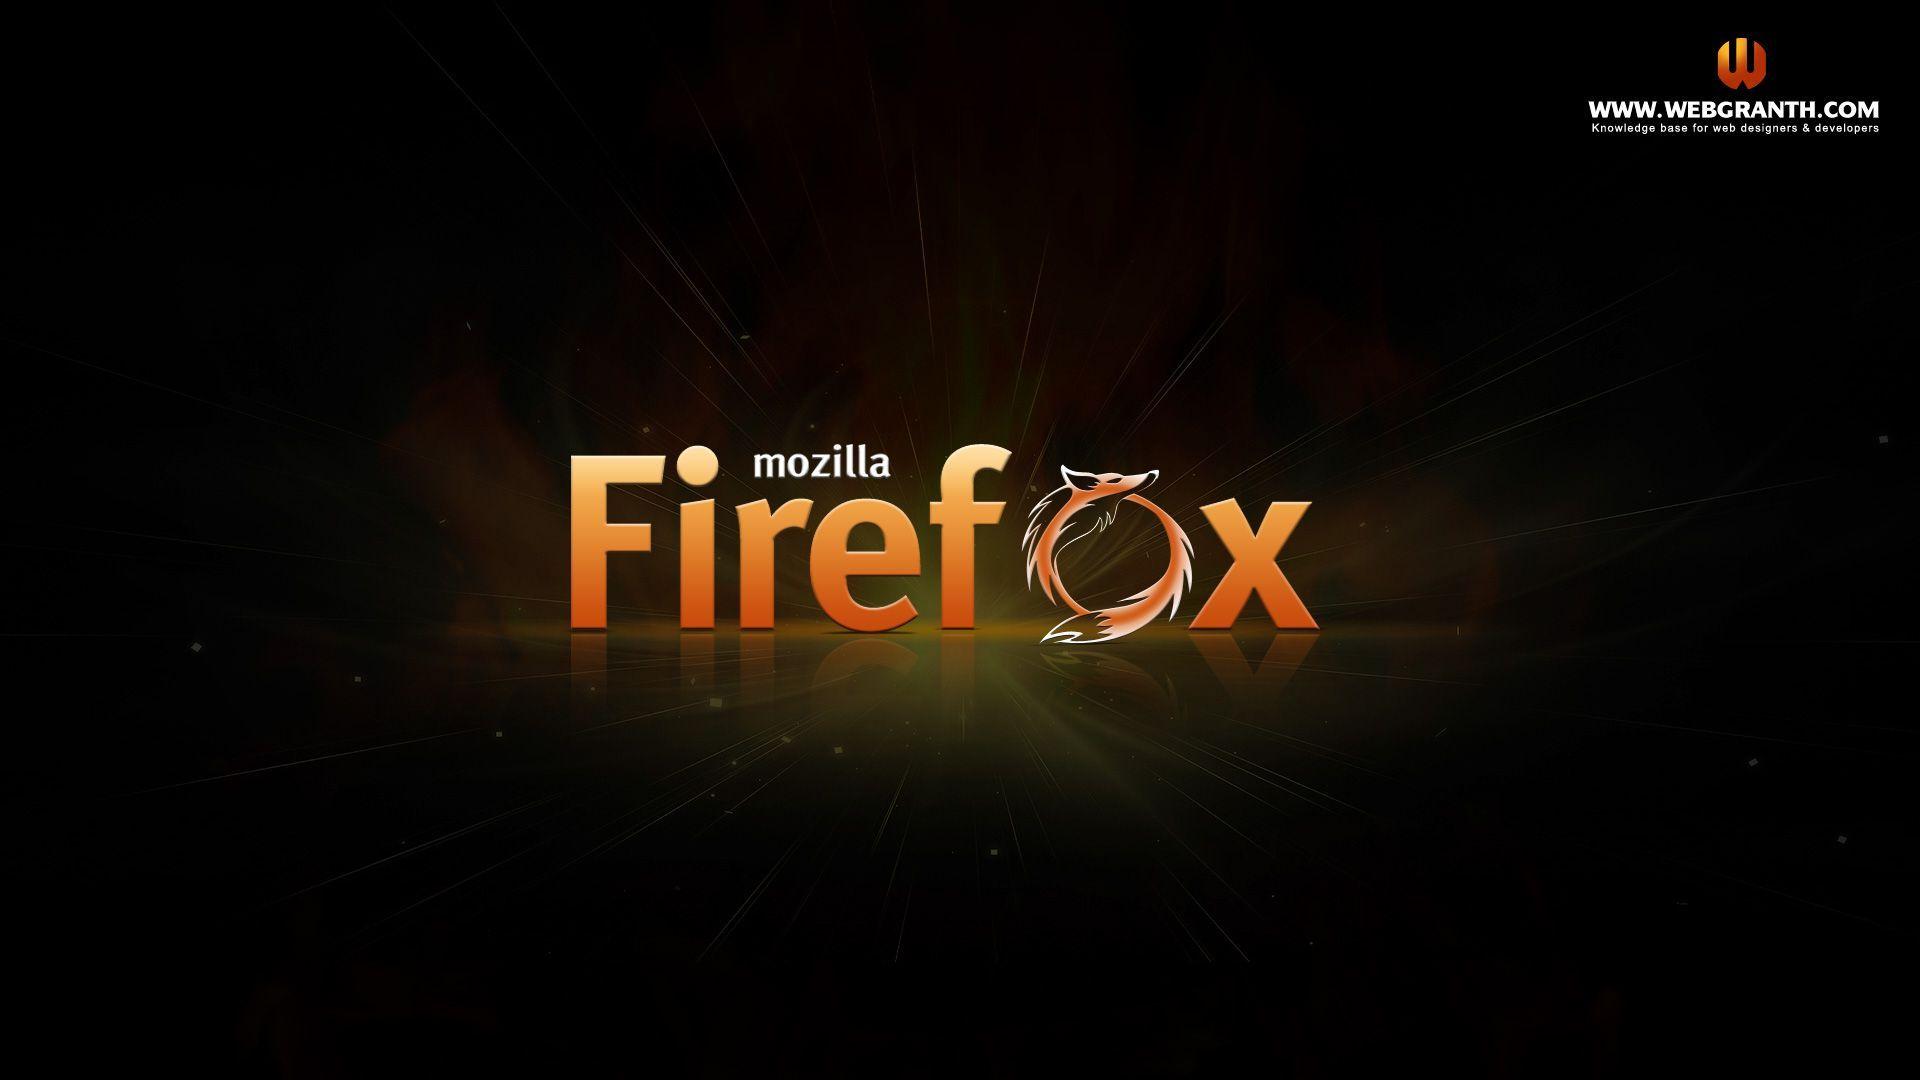 HD Mozilla Firefox wallpaper 2013